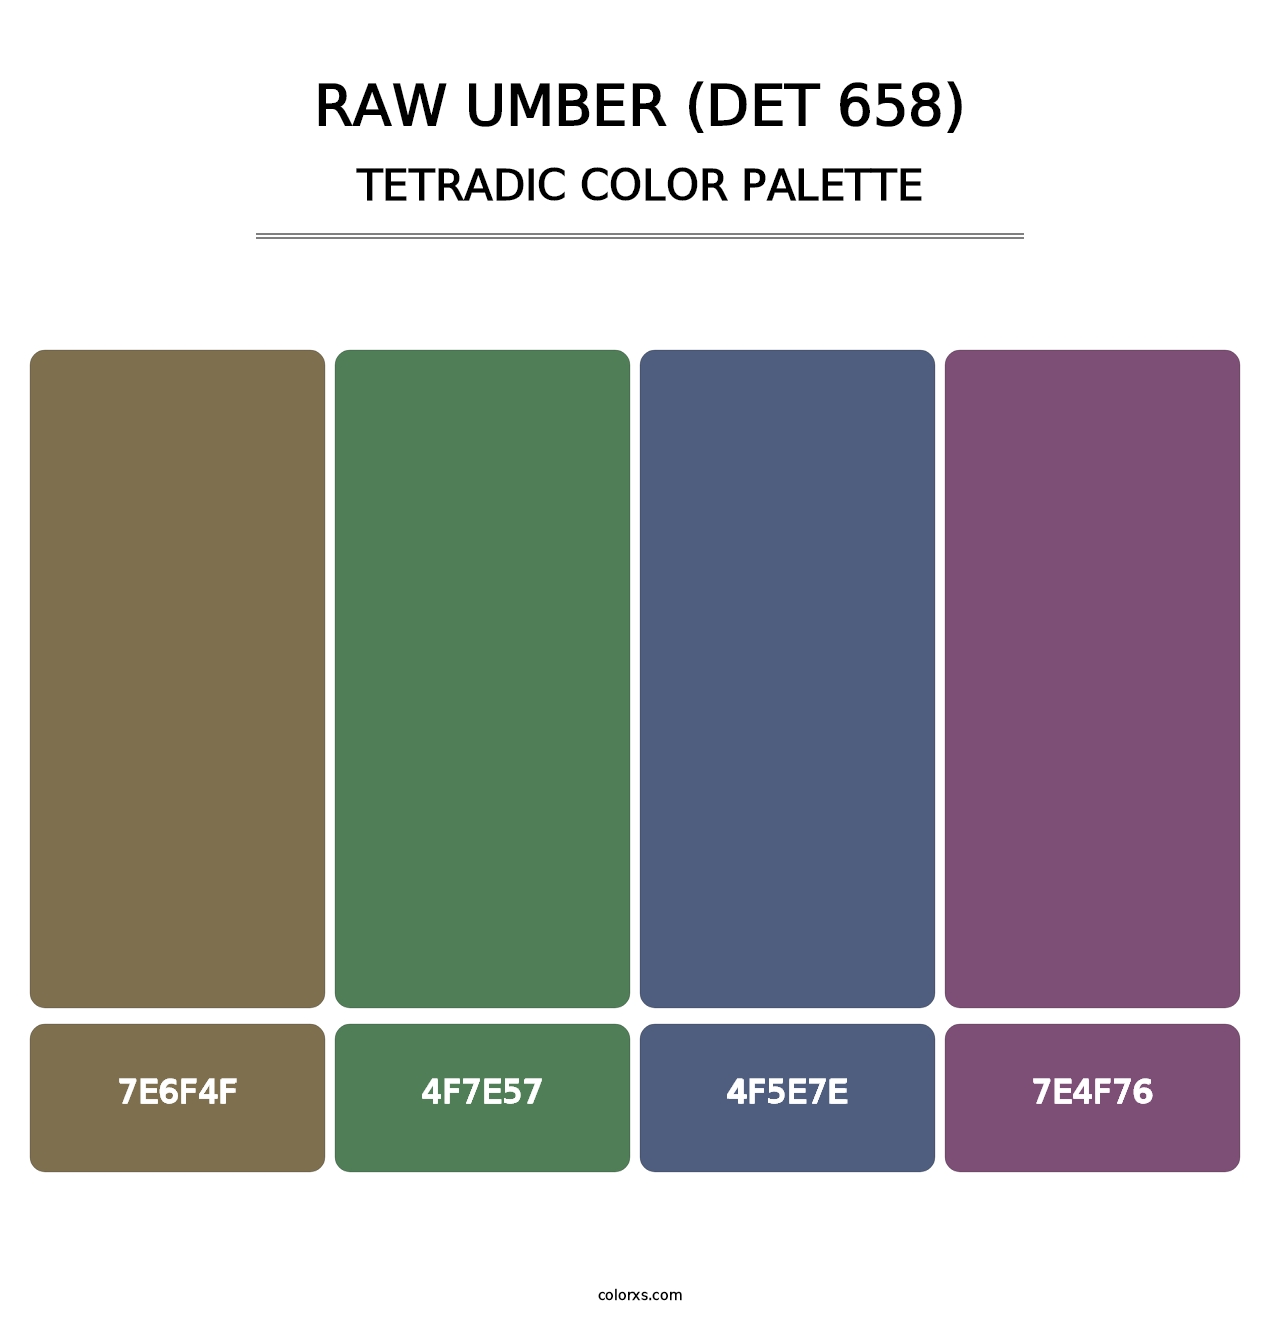 Raw Umber (DET 658) - Tetradic Color Palette